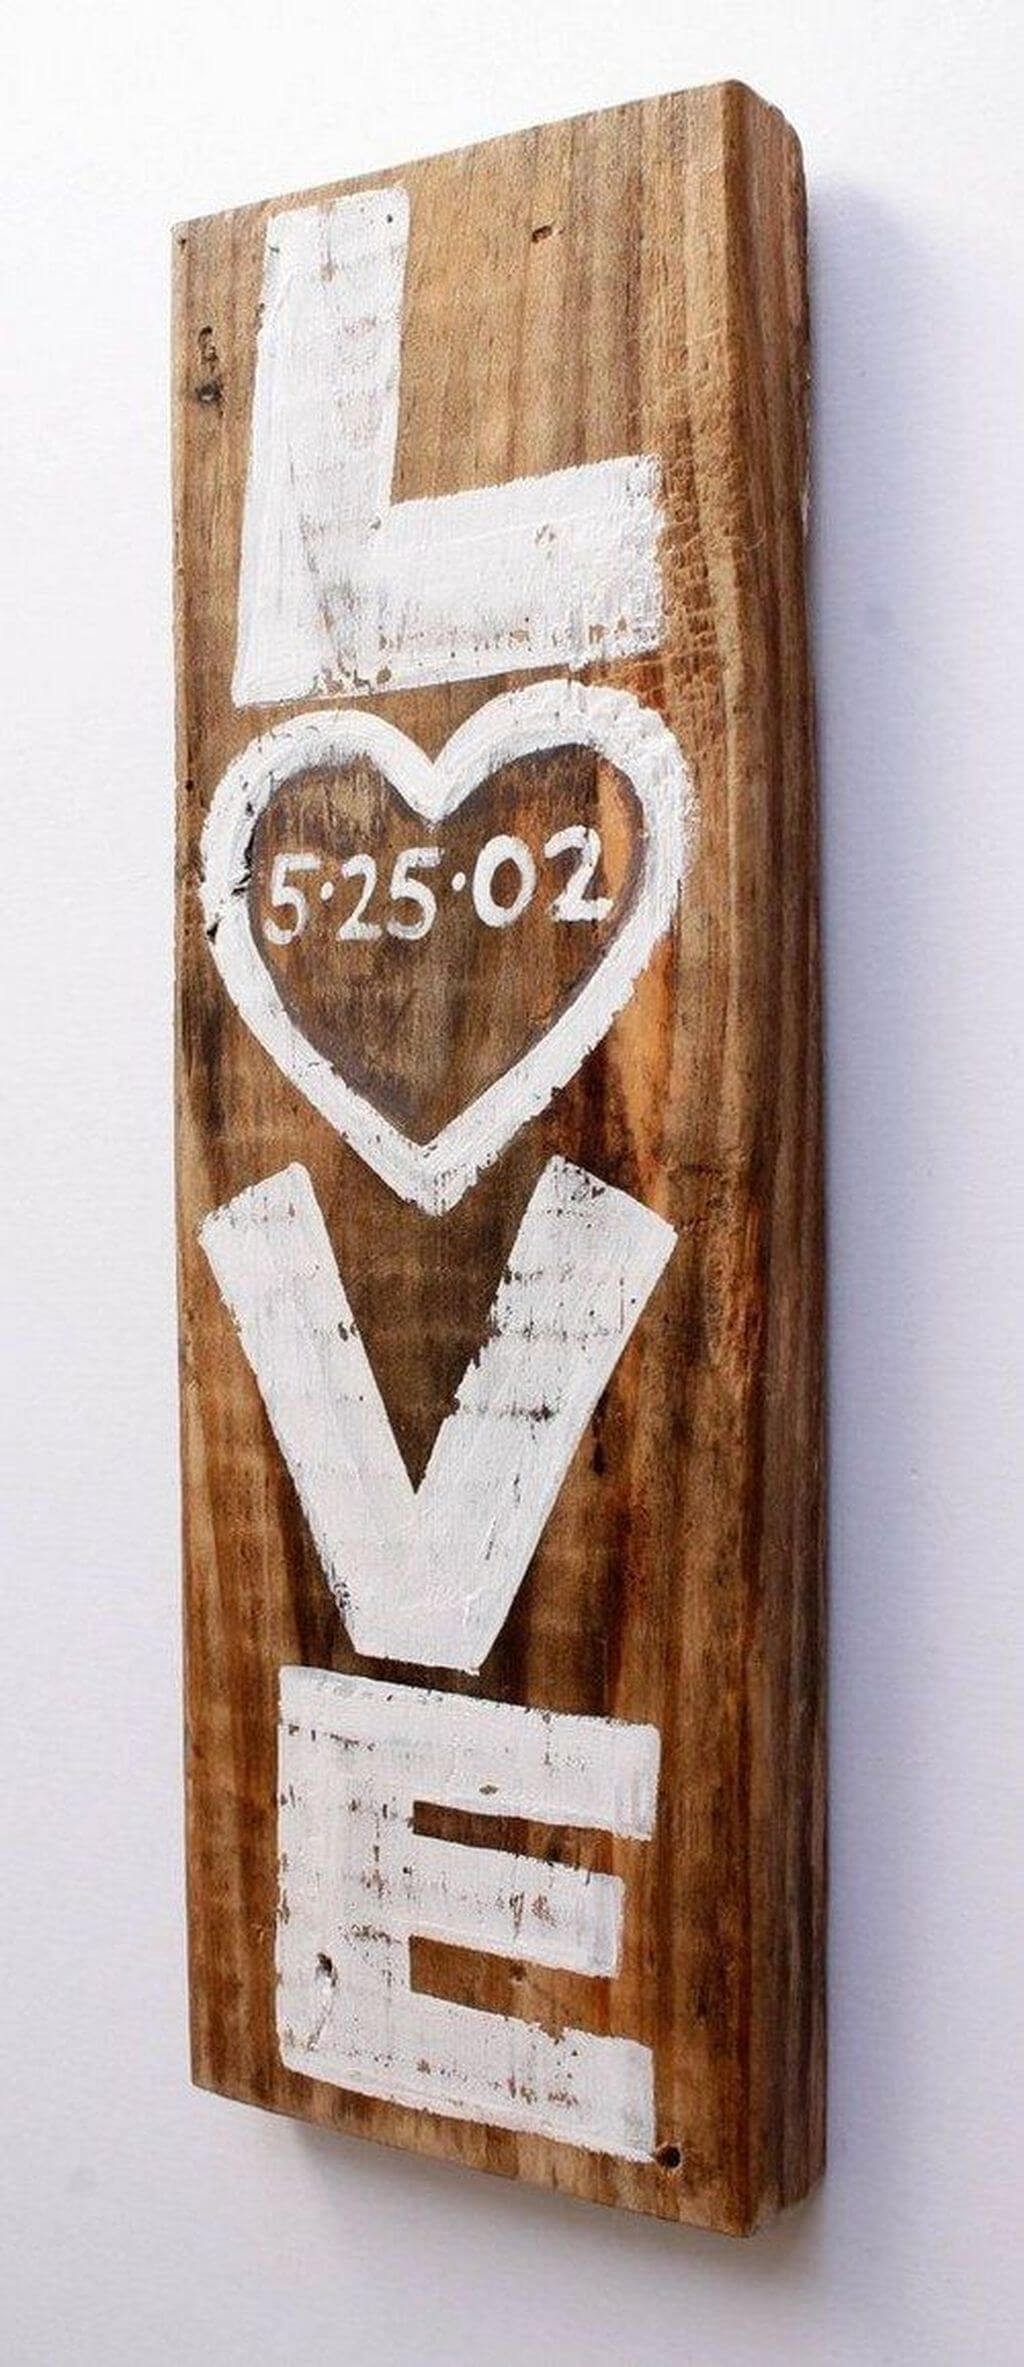 03 rustic love wood signs ideas homebnc.jpg